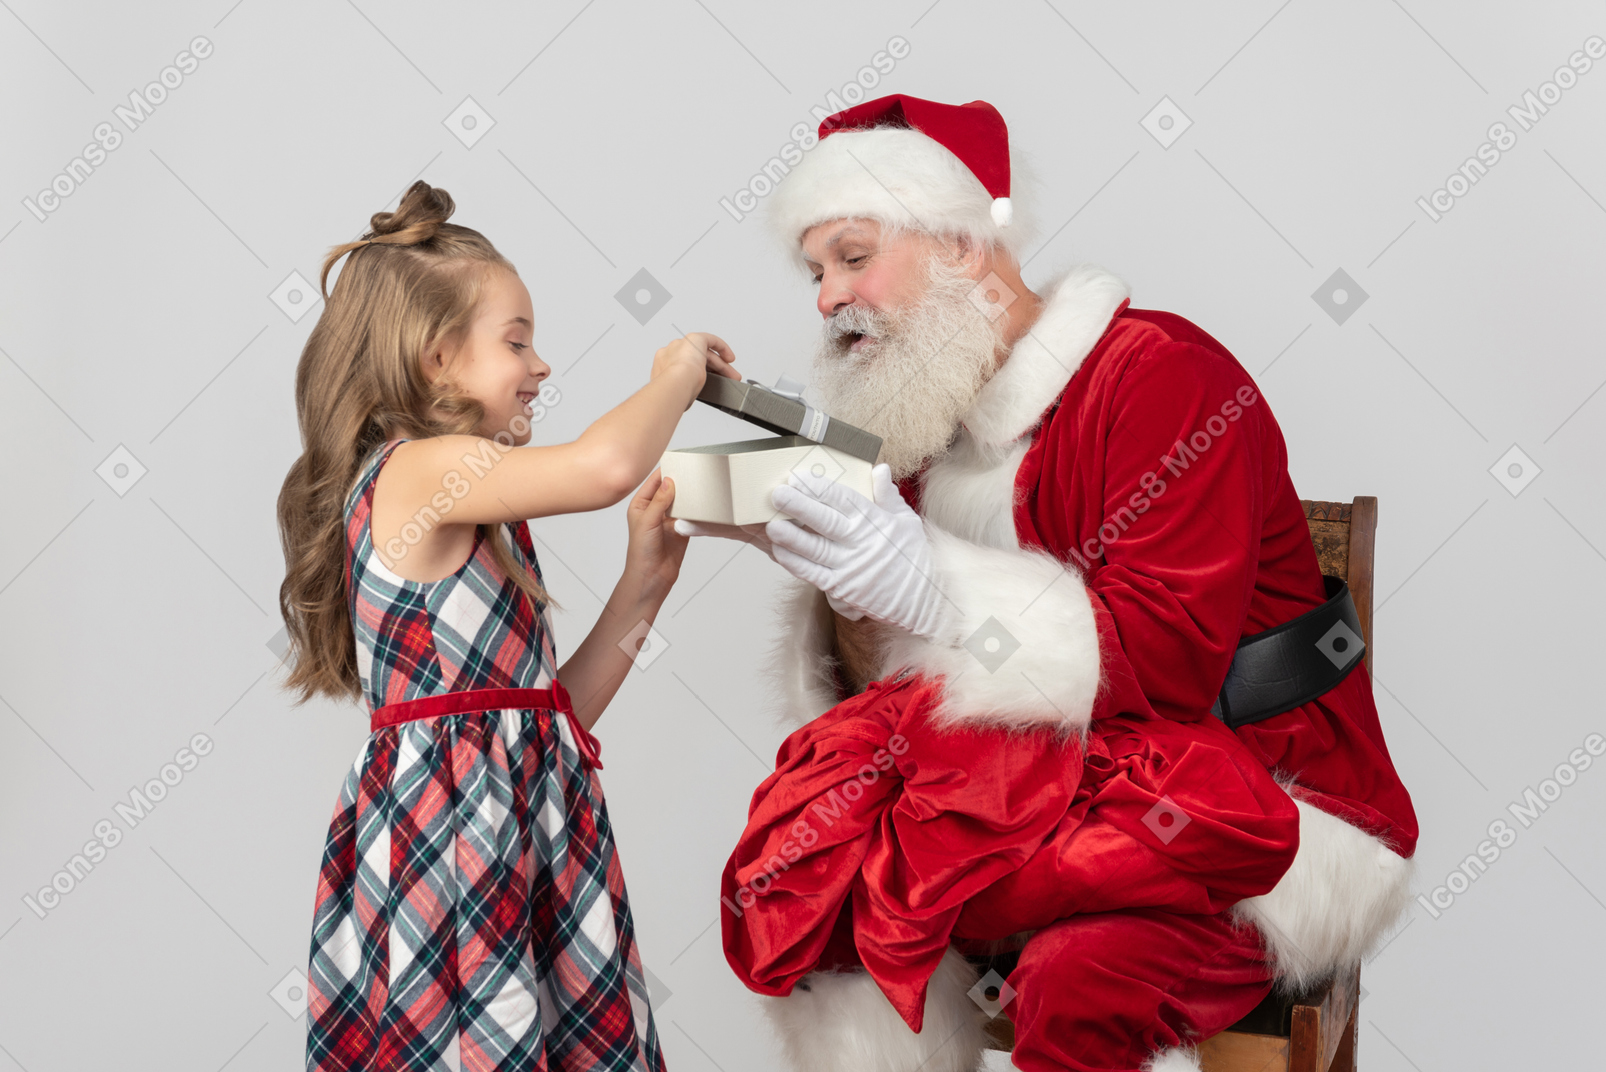 Getting to santa's secret present